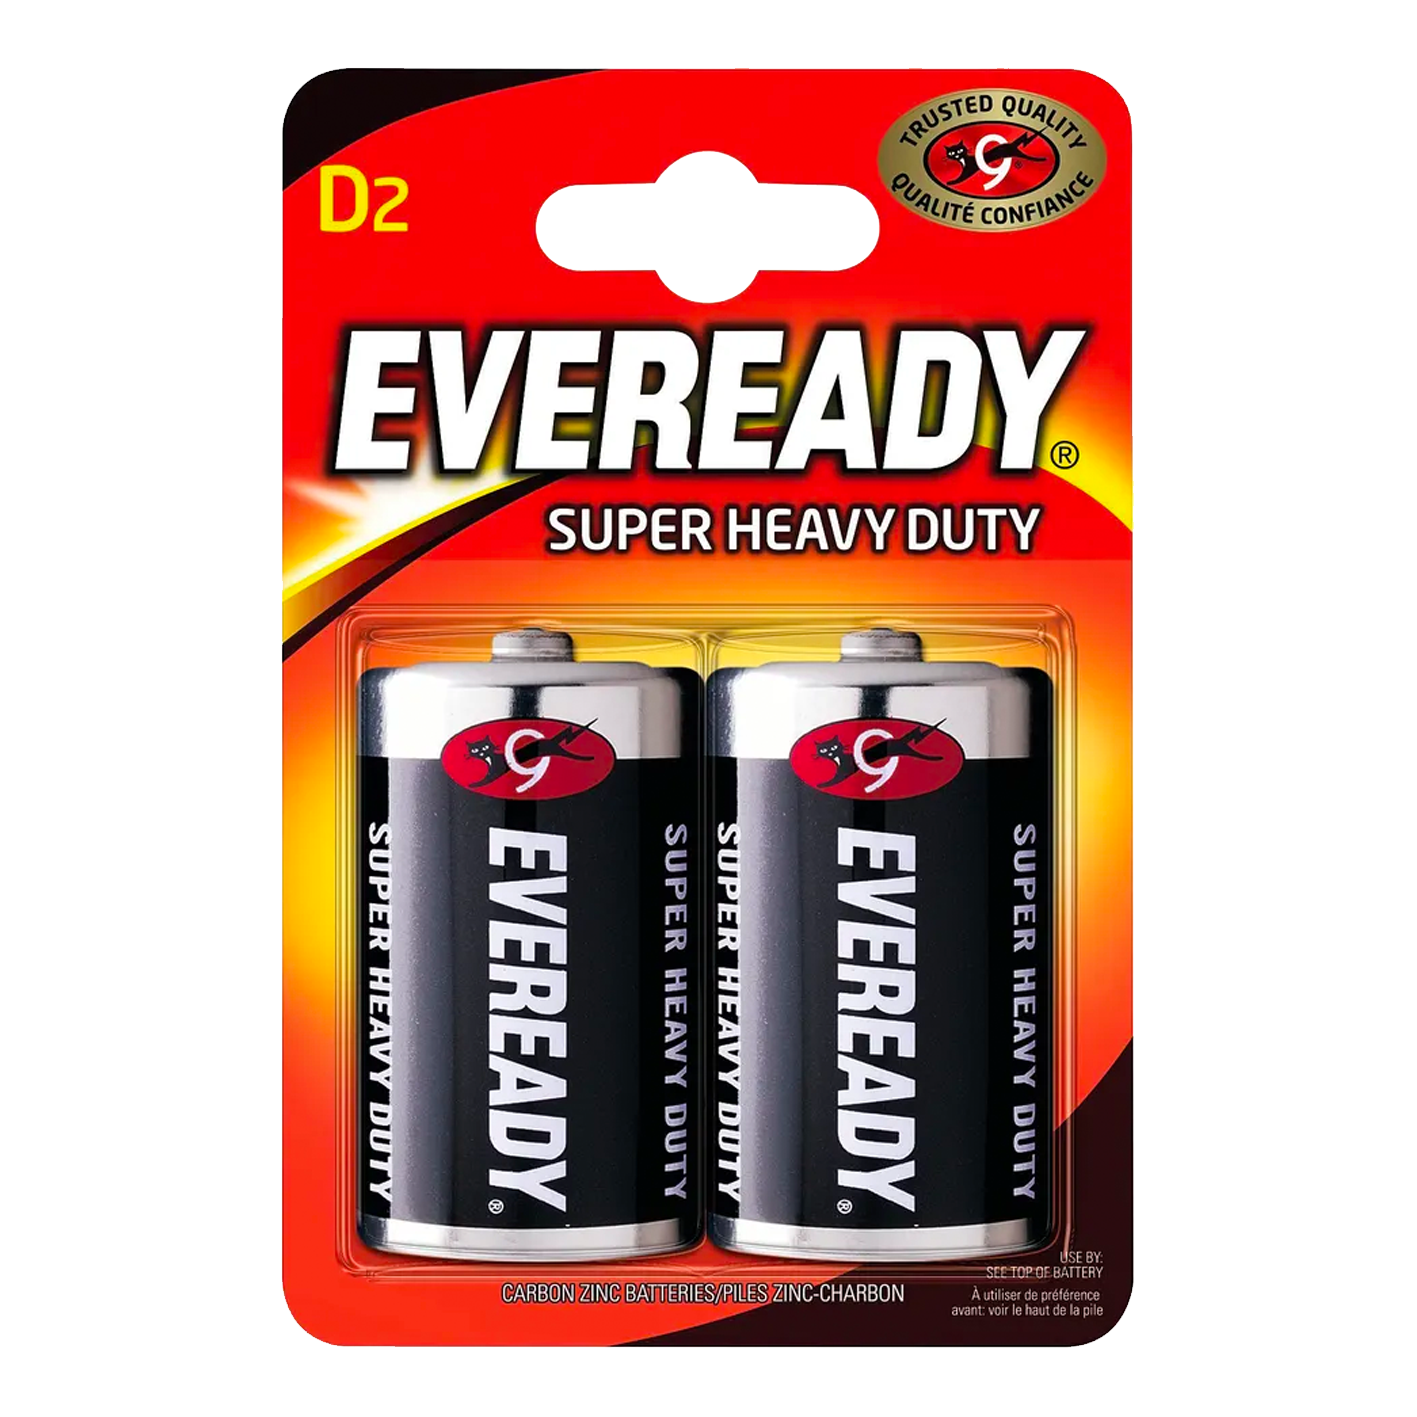 Eveready D Größe 20 Super Heavy Duty, 2er-Pack